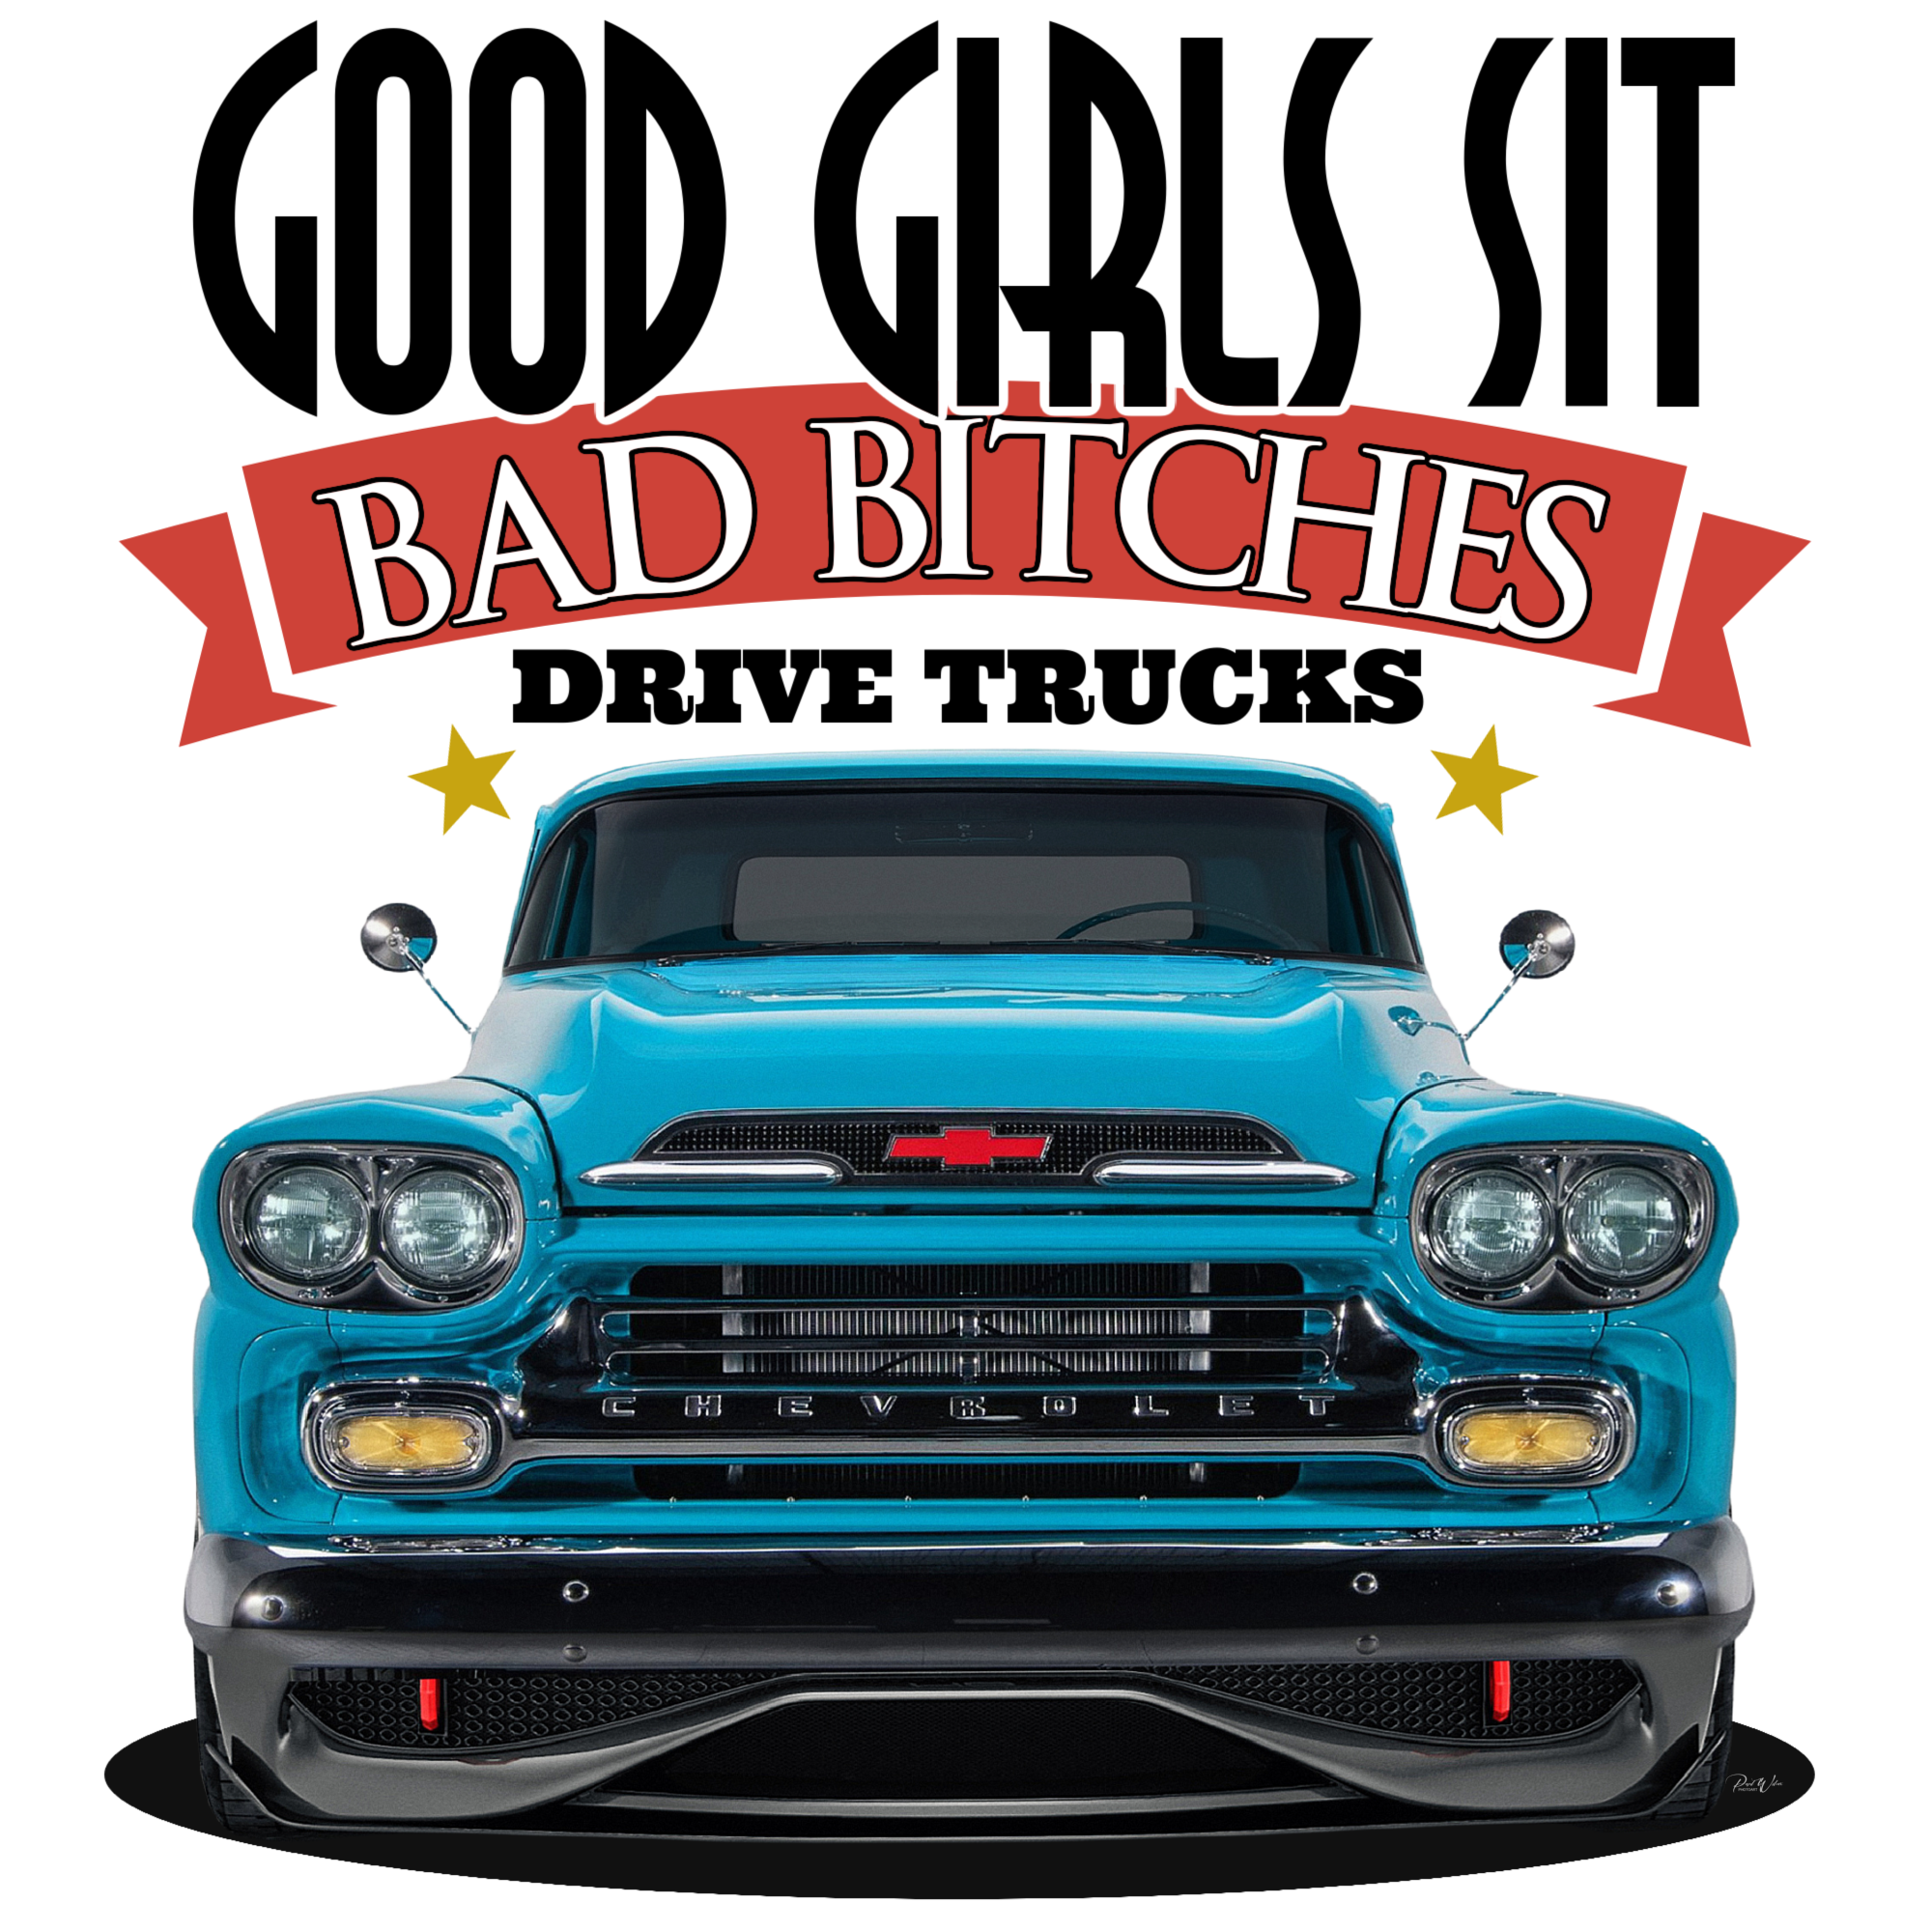 Good Girls Sit Bad Bitches Drive Trucks - Image